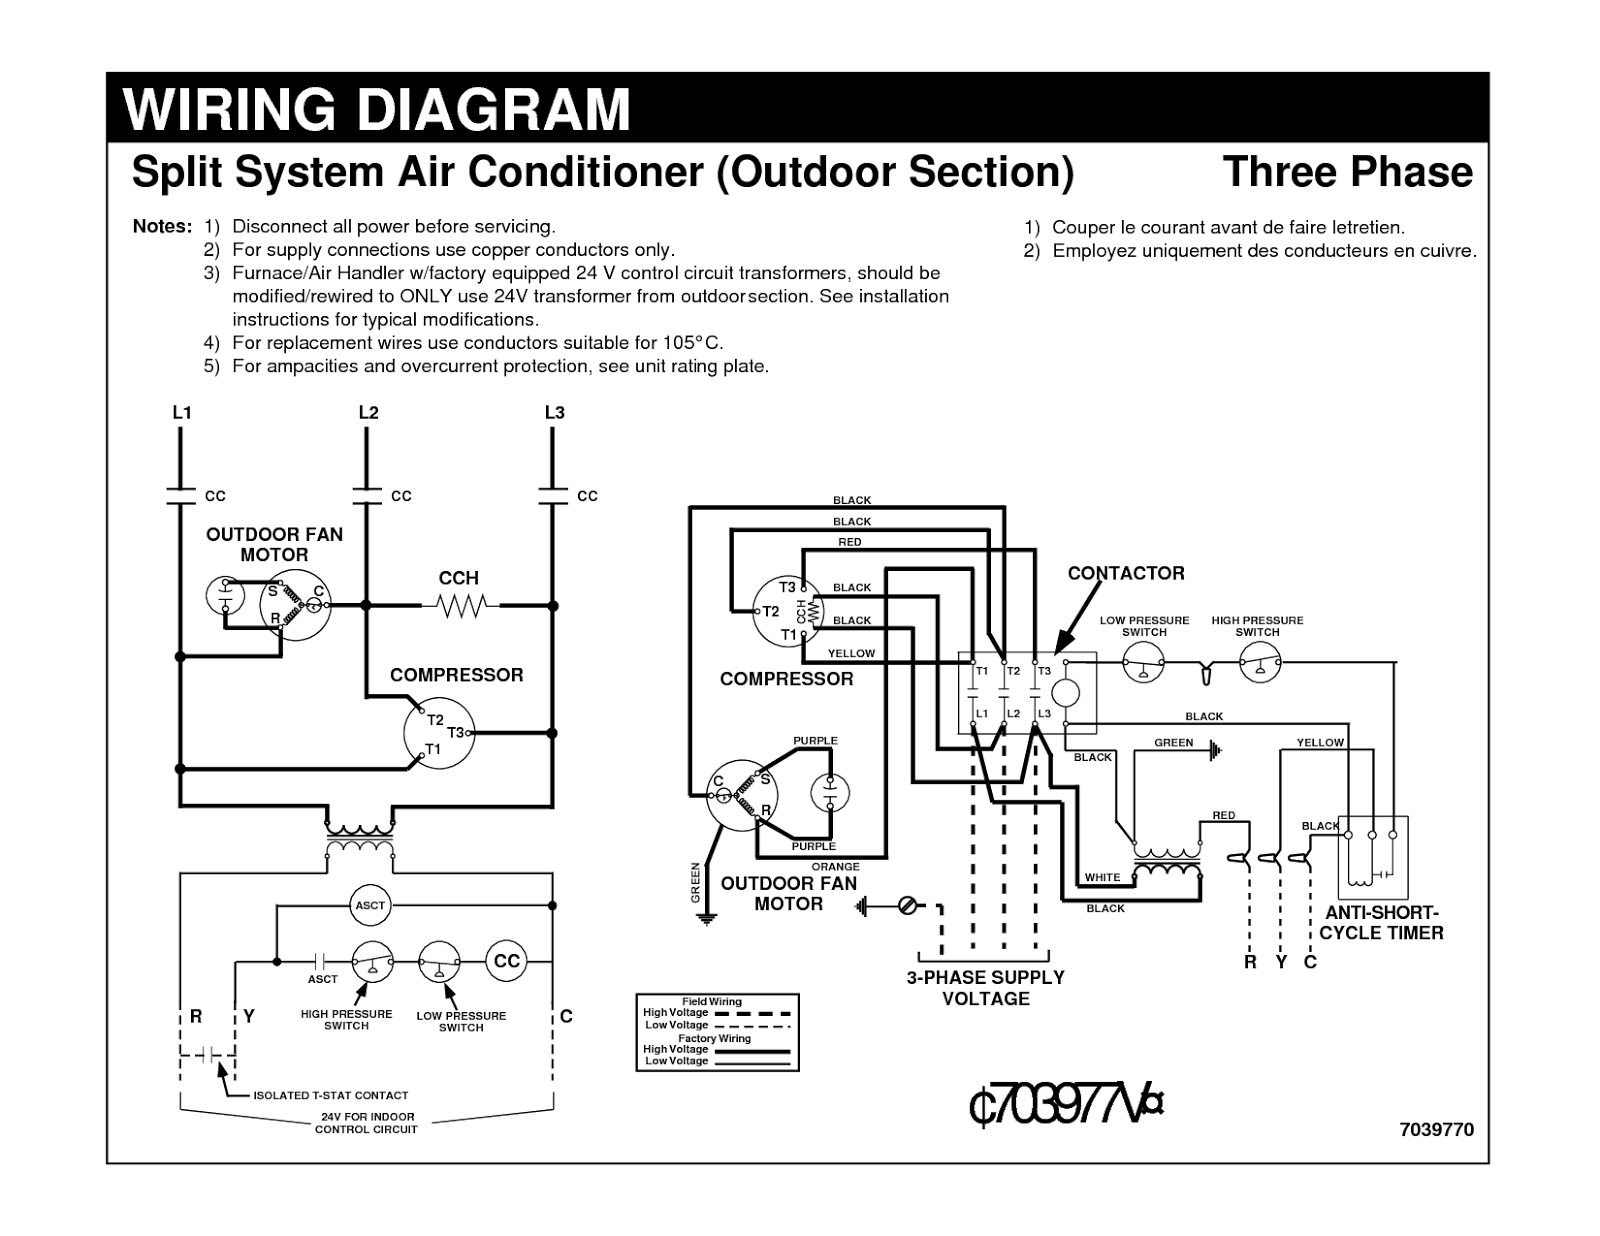 Ac Installation Diagram - Data Wiring Diagram Today - Auto Ac Compressor Wiring Diagram